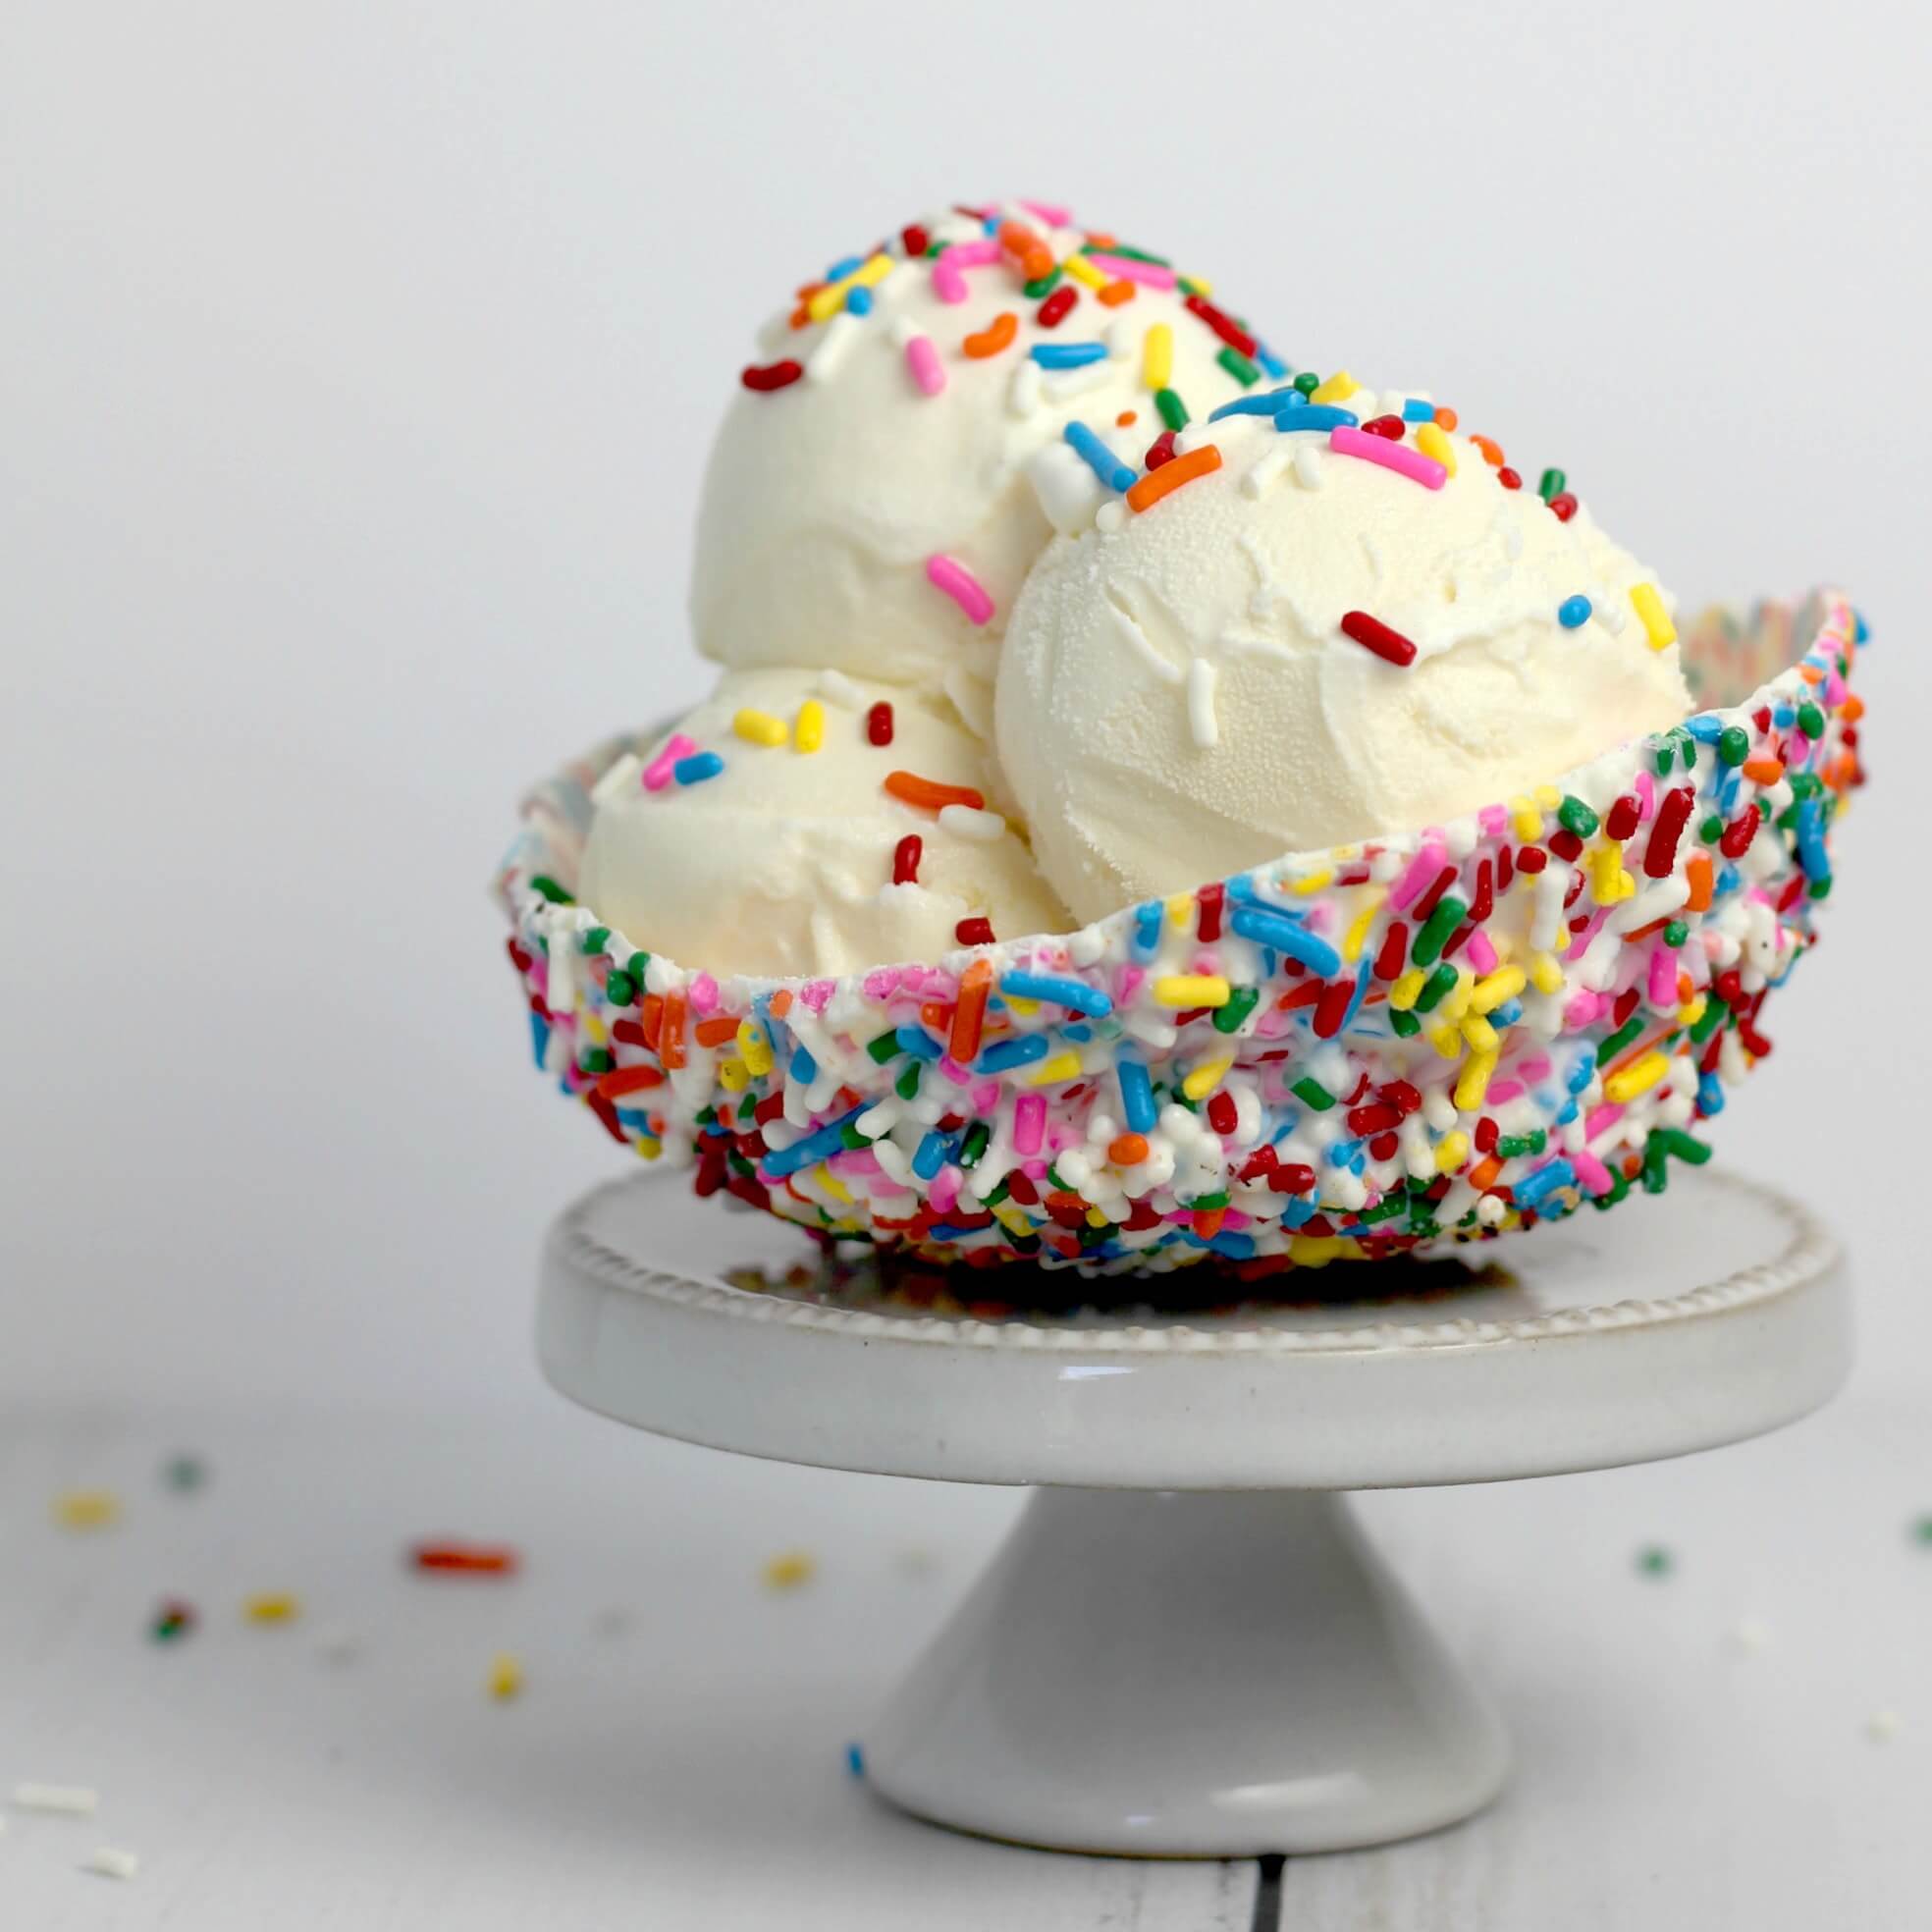 Birthday Cake Ice Cream Recipe A Fun Ice Cream Flavor